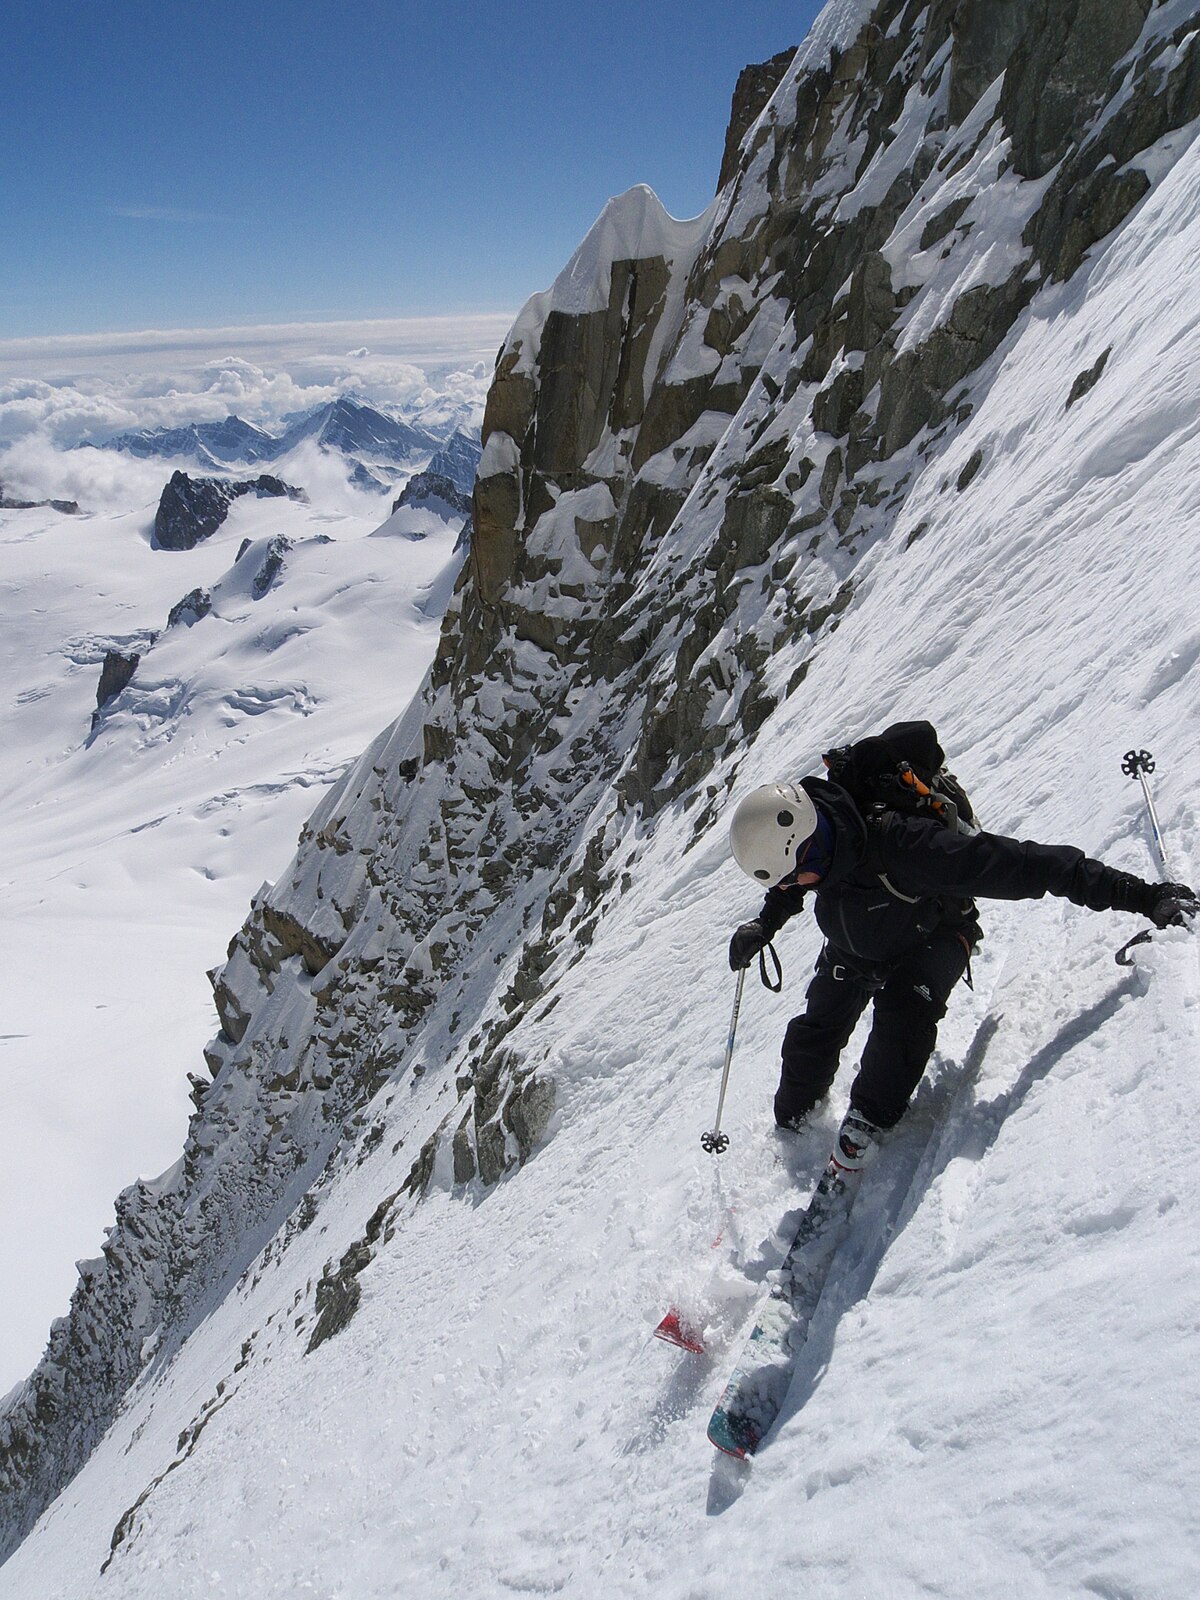 https://upload.wikimedia.org/wikipedia/commons/thumb/0/05/Mont_Blanc_du_Tacul_-_Couloir_Jager_-_Ski_descent.jpg/1200px-Mont_Blanc_du_Tacul_-_Couloir_Jager_-_Ski_descent.jpg